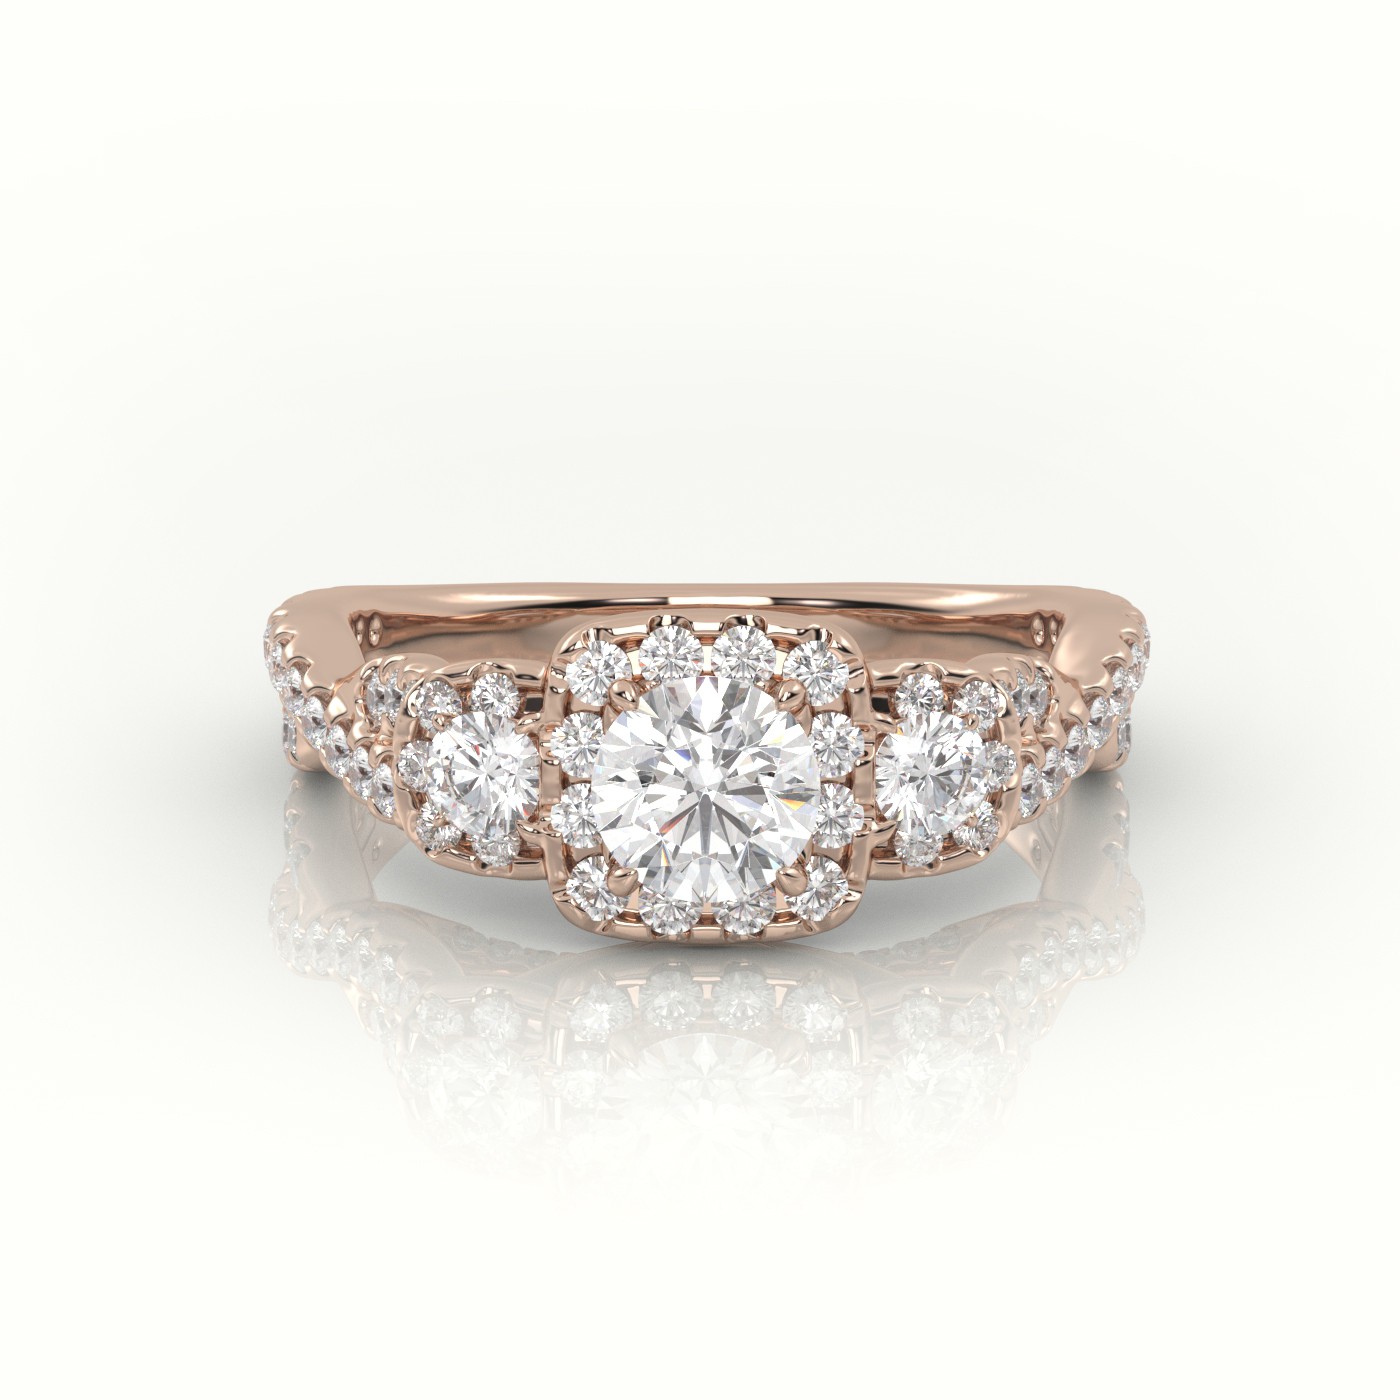 18K ROSE GOLD ROUND CUT DIAMOND HALO SETTING DESIGNER ENGAGEMENT RING